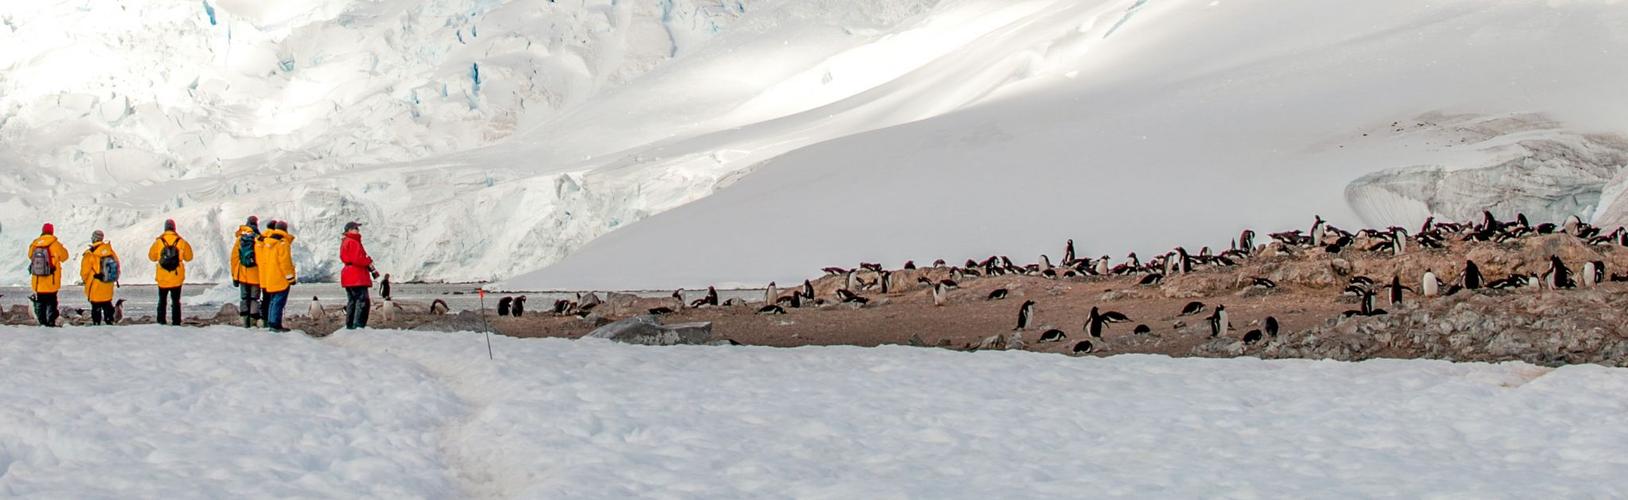 Penguins Cuverville Island, Antarctica